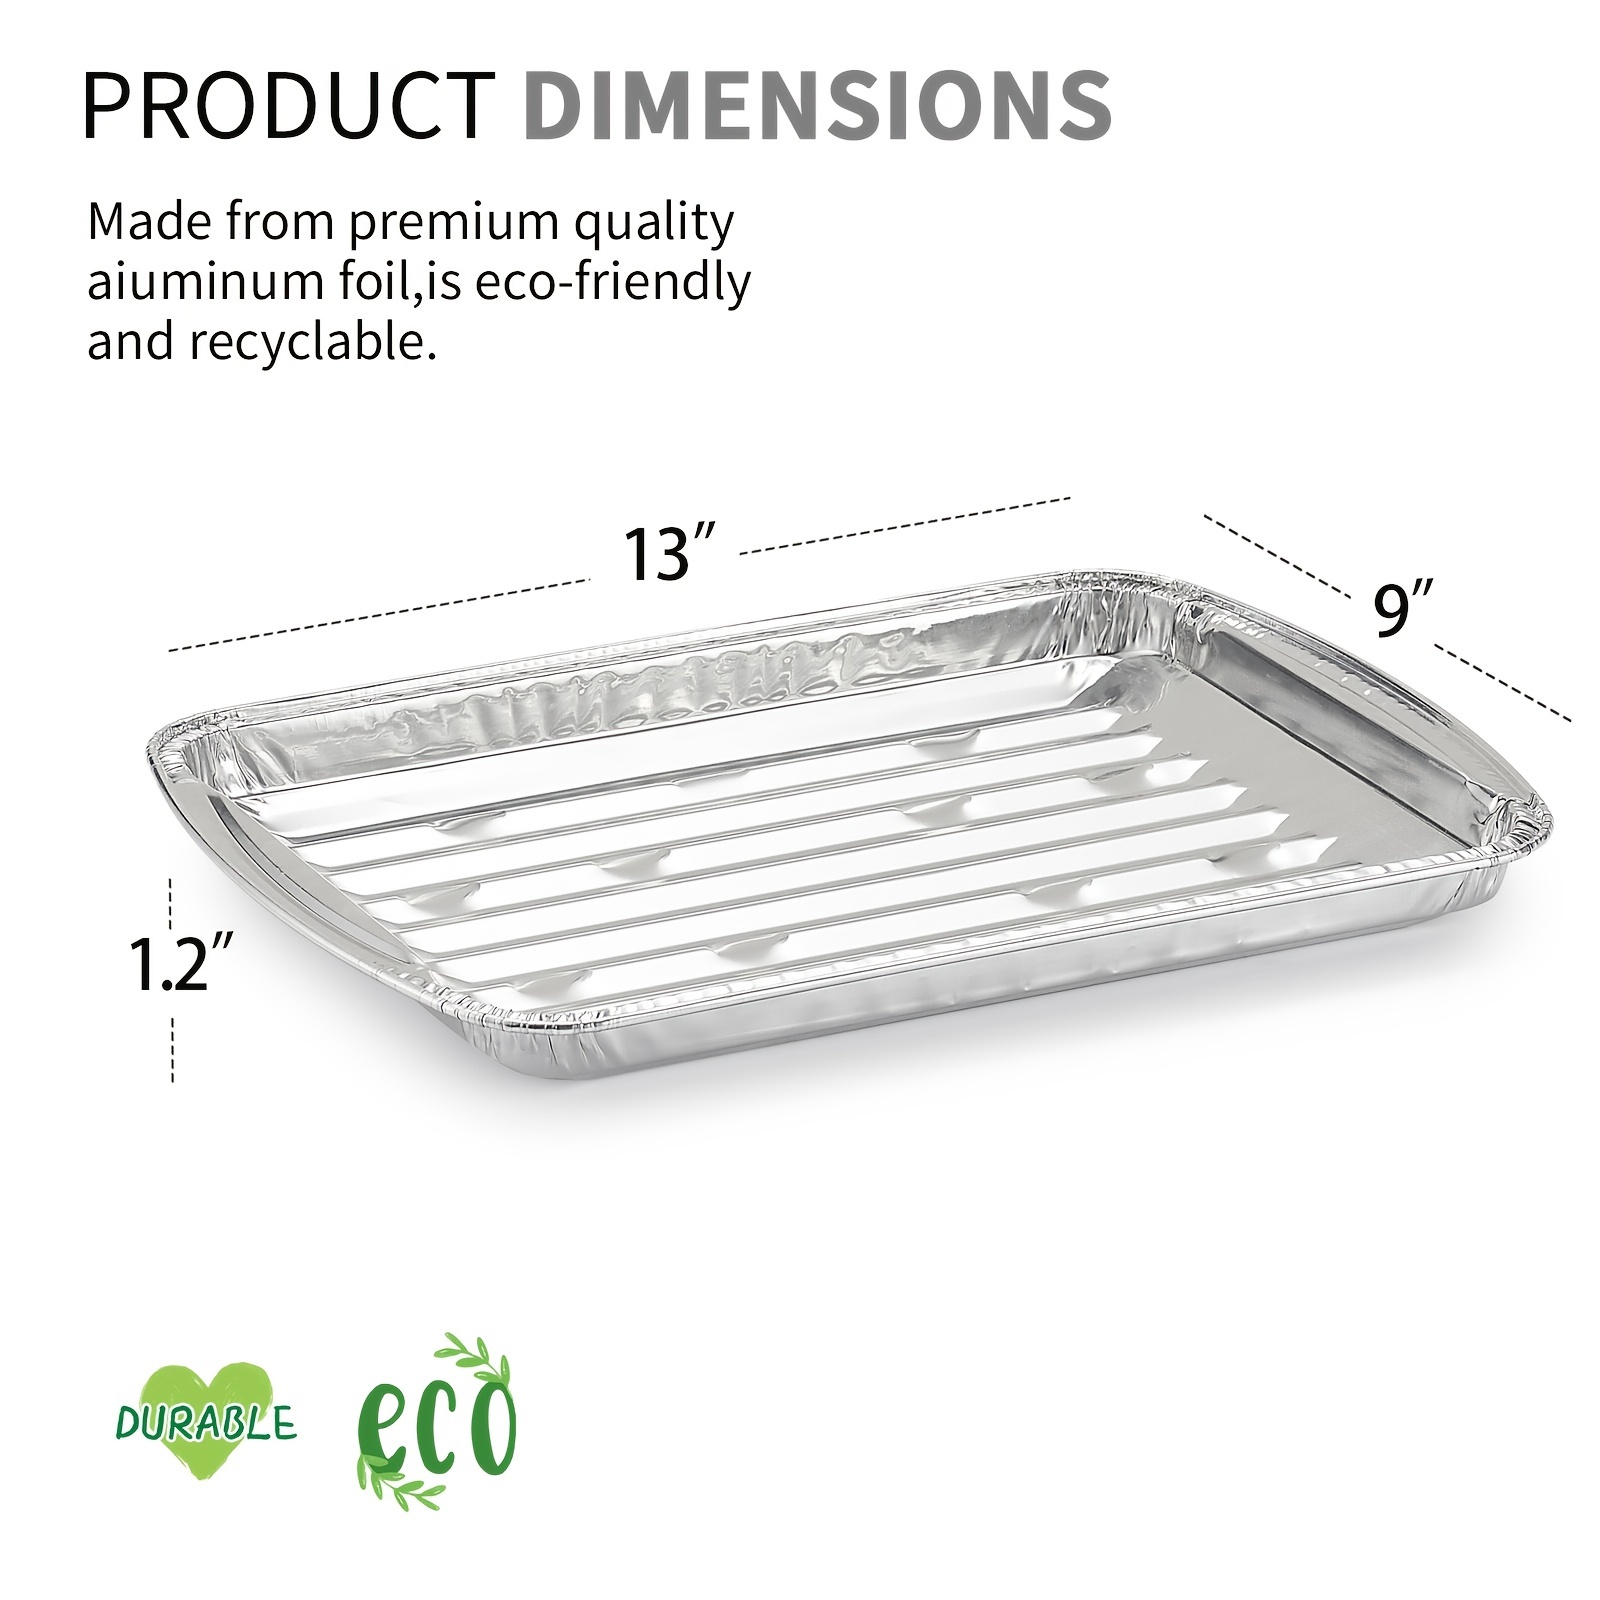 Disposable Aluminum Foil Baking Sheets, Heat Resistant Baking Pan